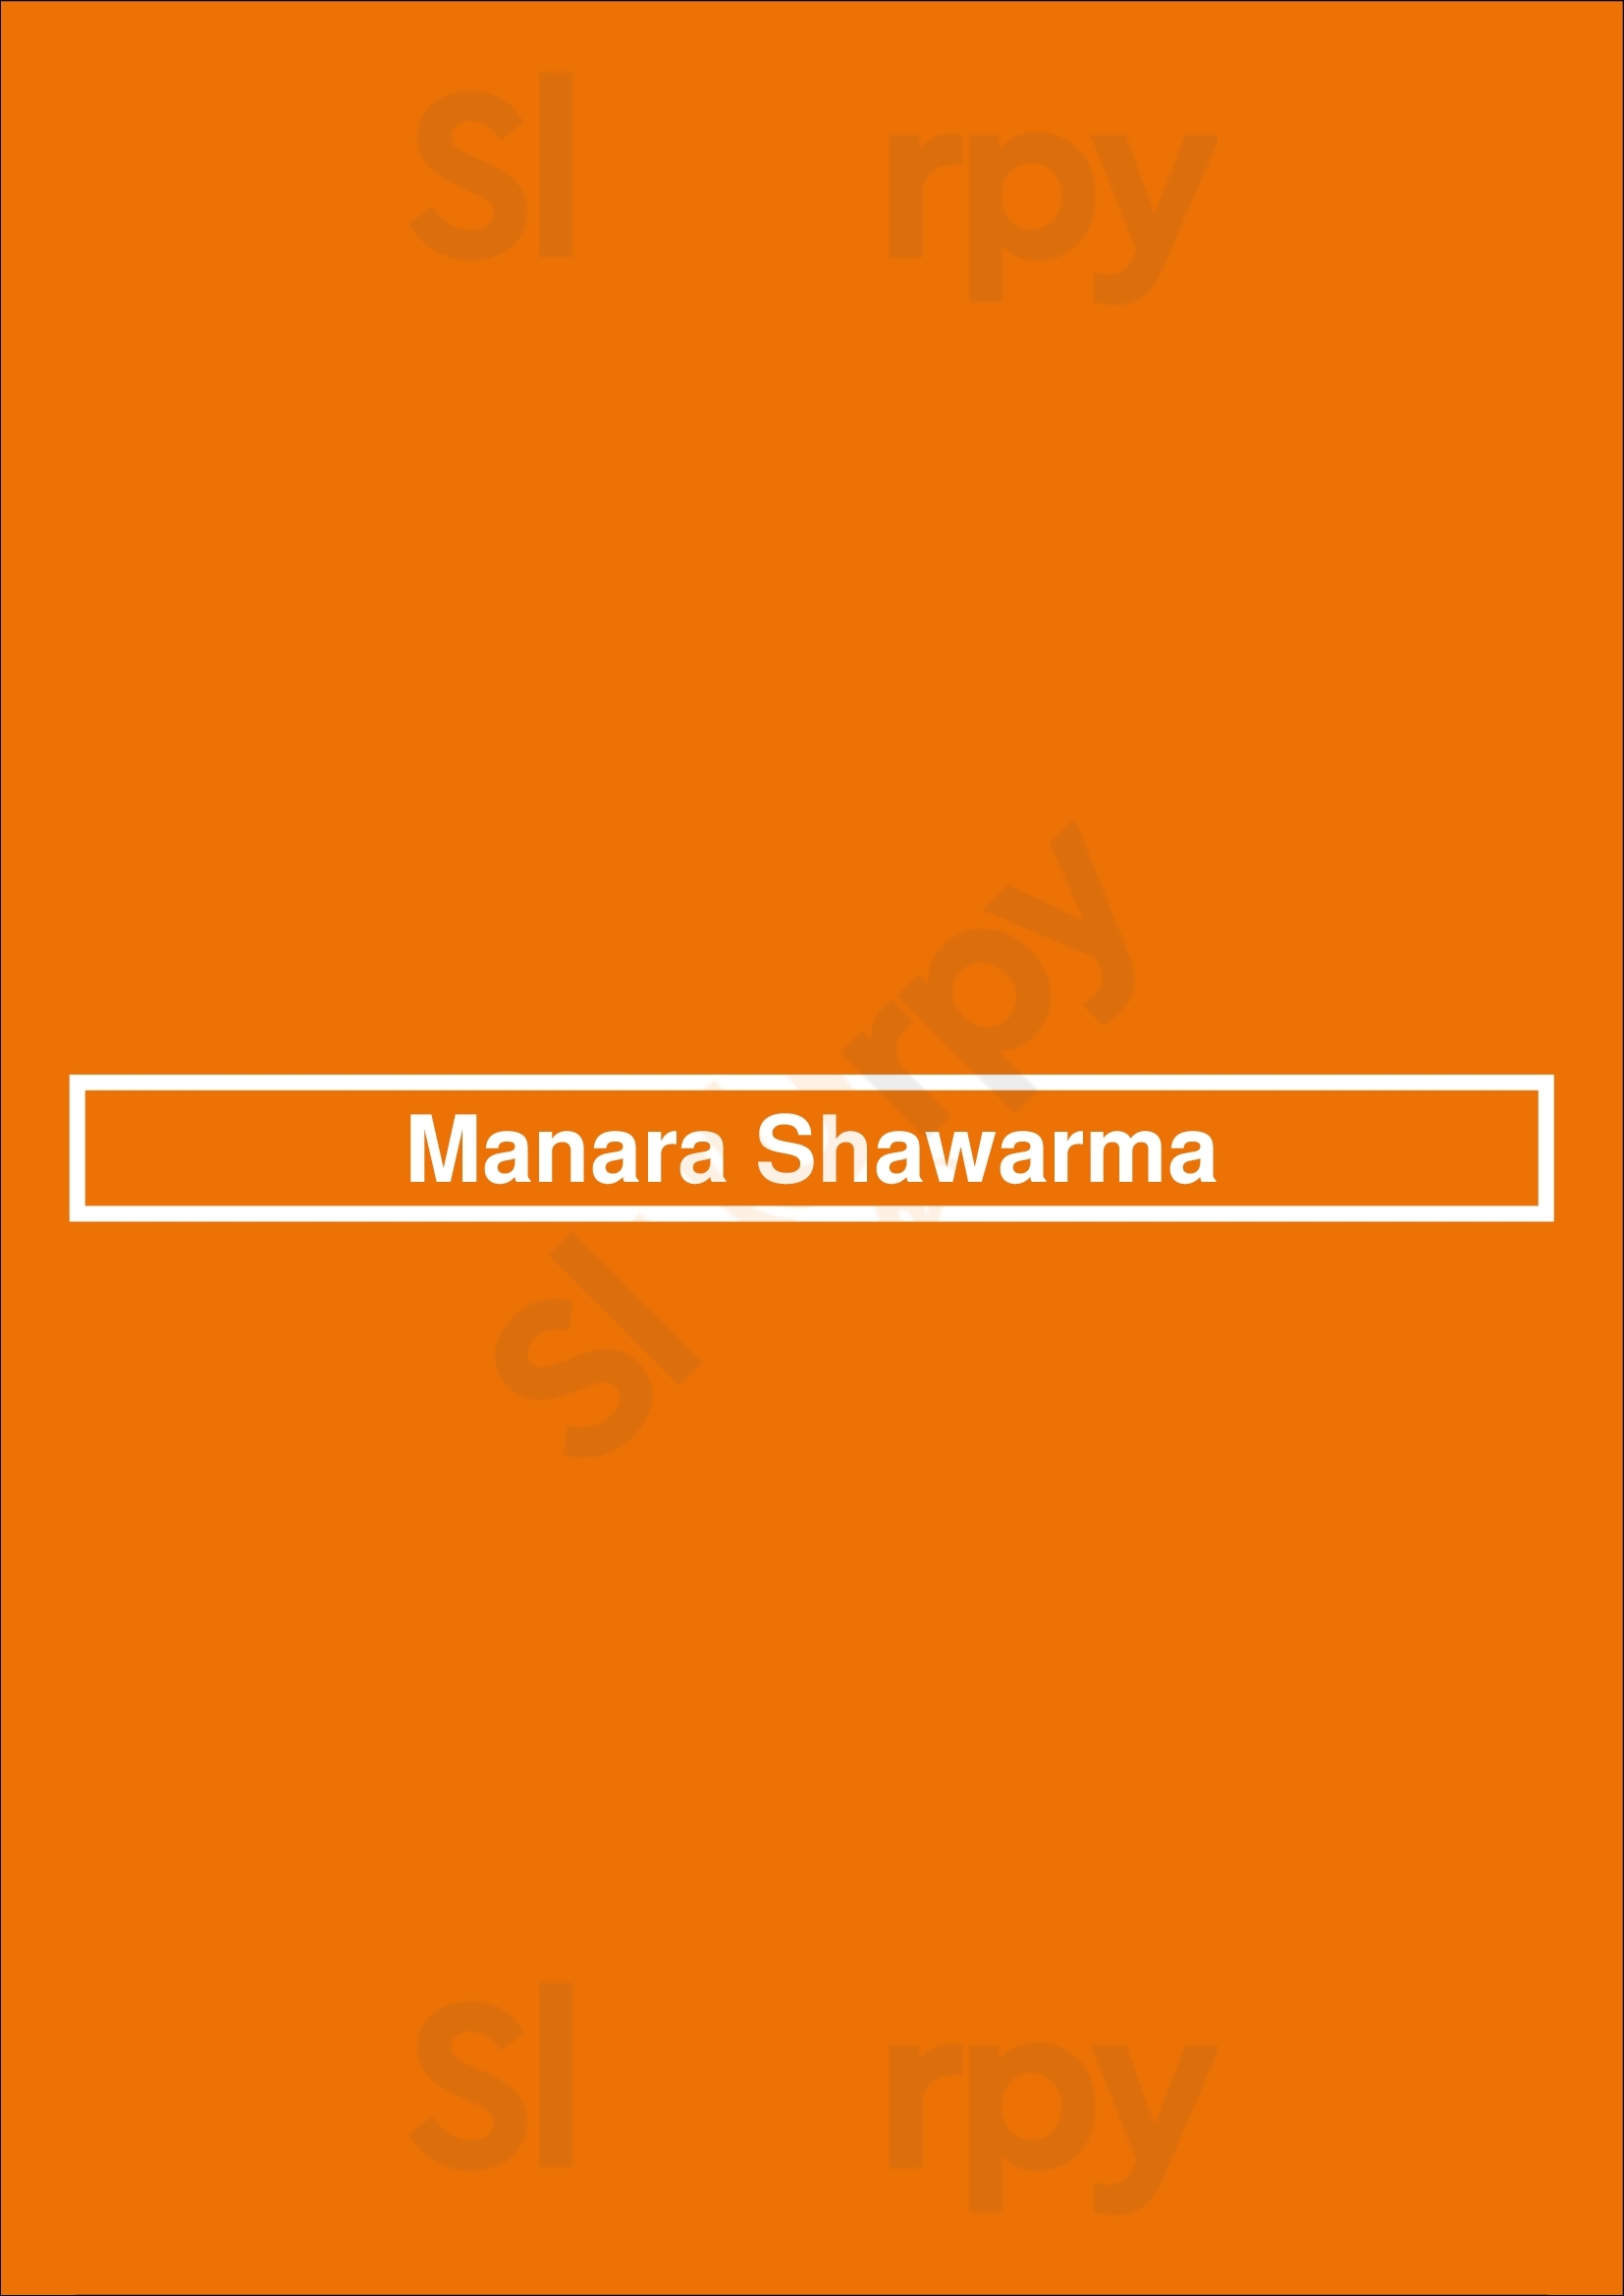 Manara Shawarma Gatineau Menu - 1